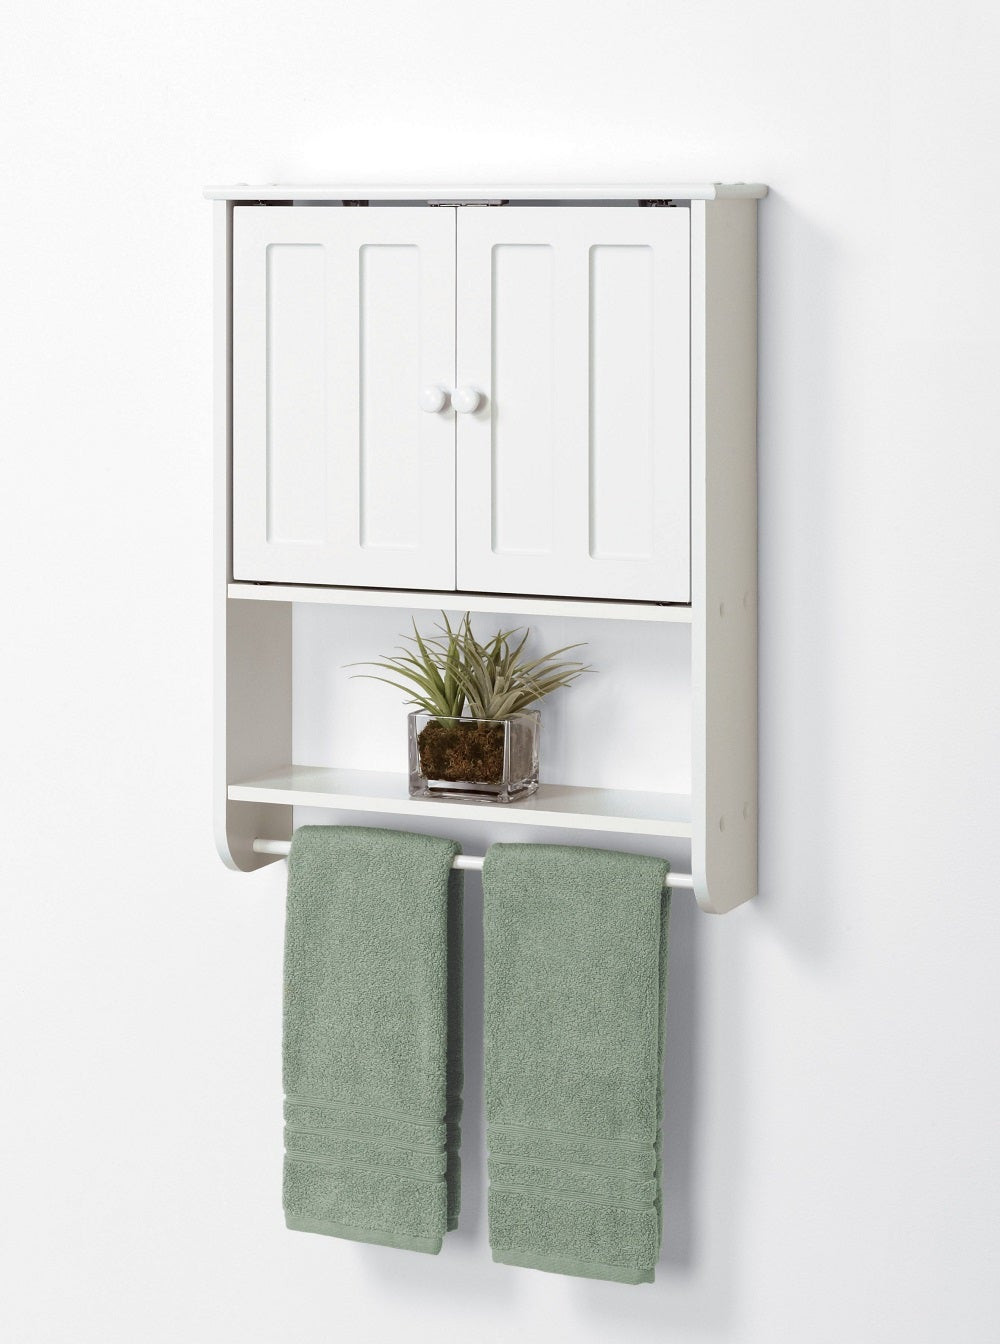 Bathroom Cabinet With Towel Rack
 Espresso Wall Mounted Bathroom Cabinet with Shelves and